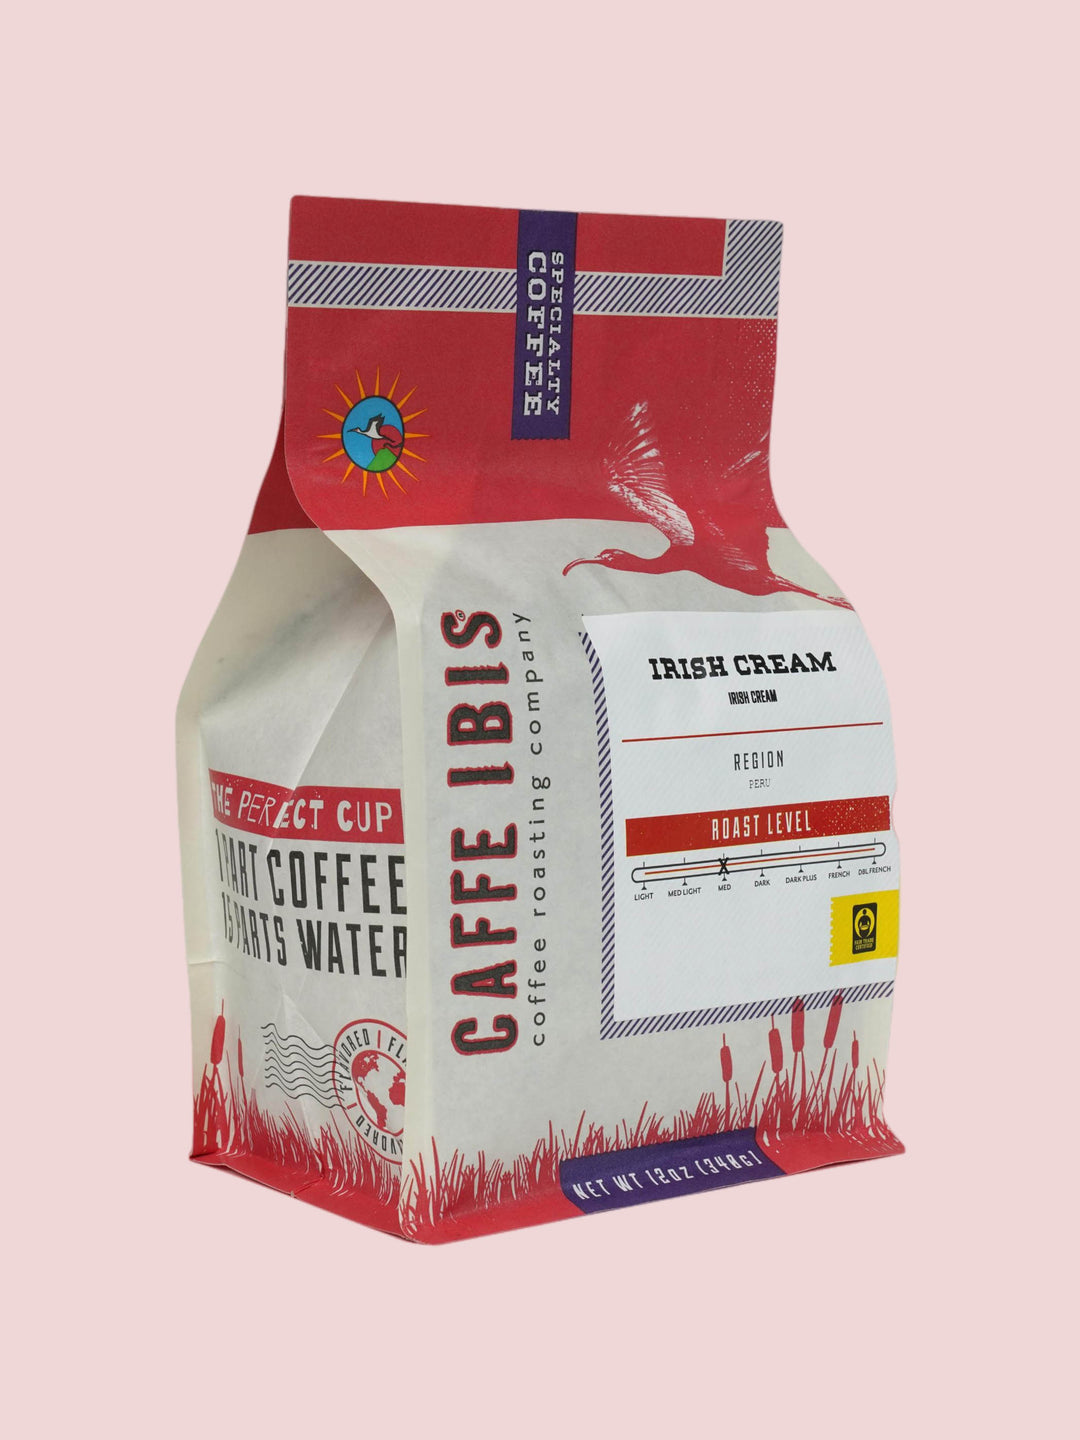 Caffe Ibis flavor Irish Cream coffee in a pink twelve ounce bag; front quarter view.